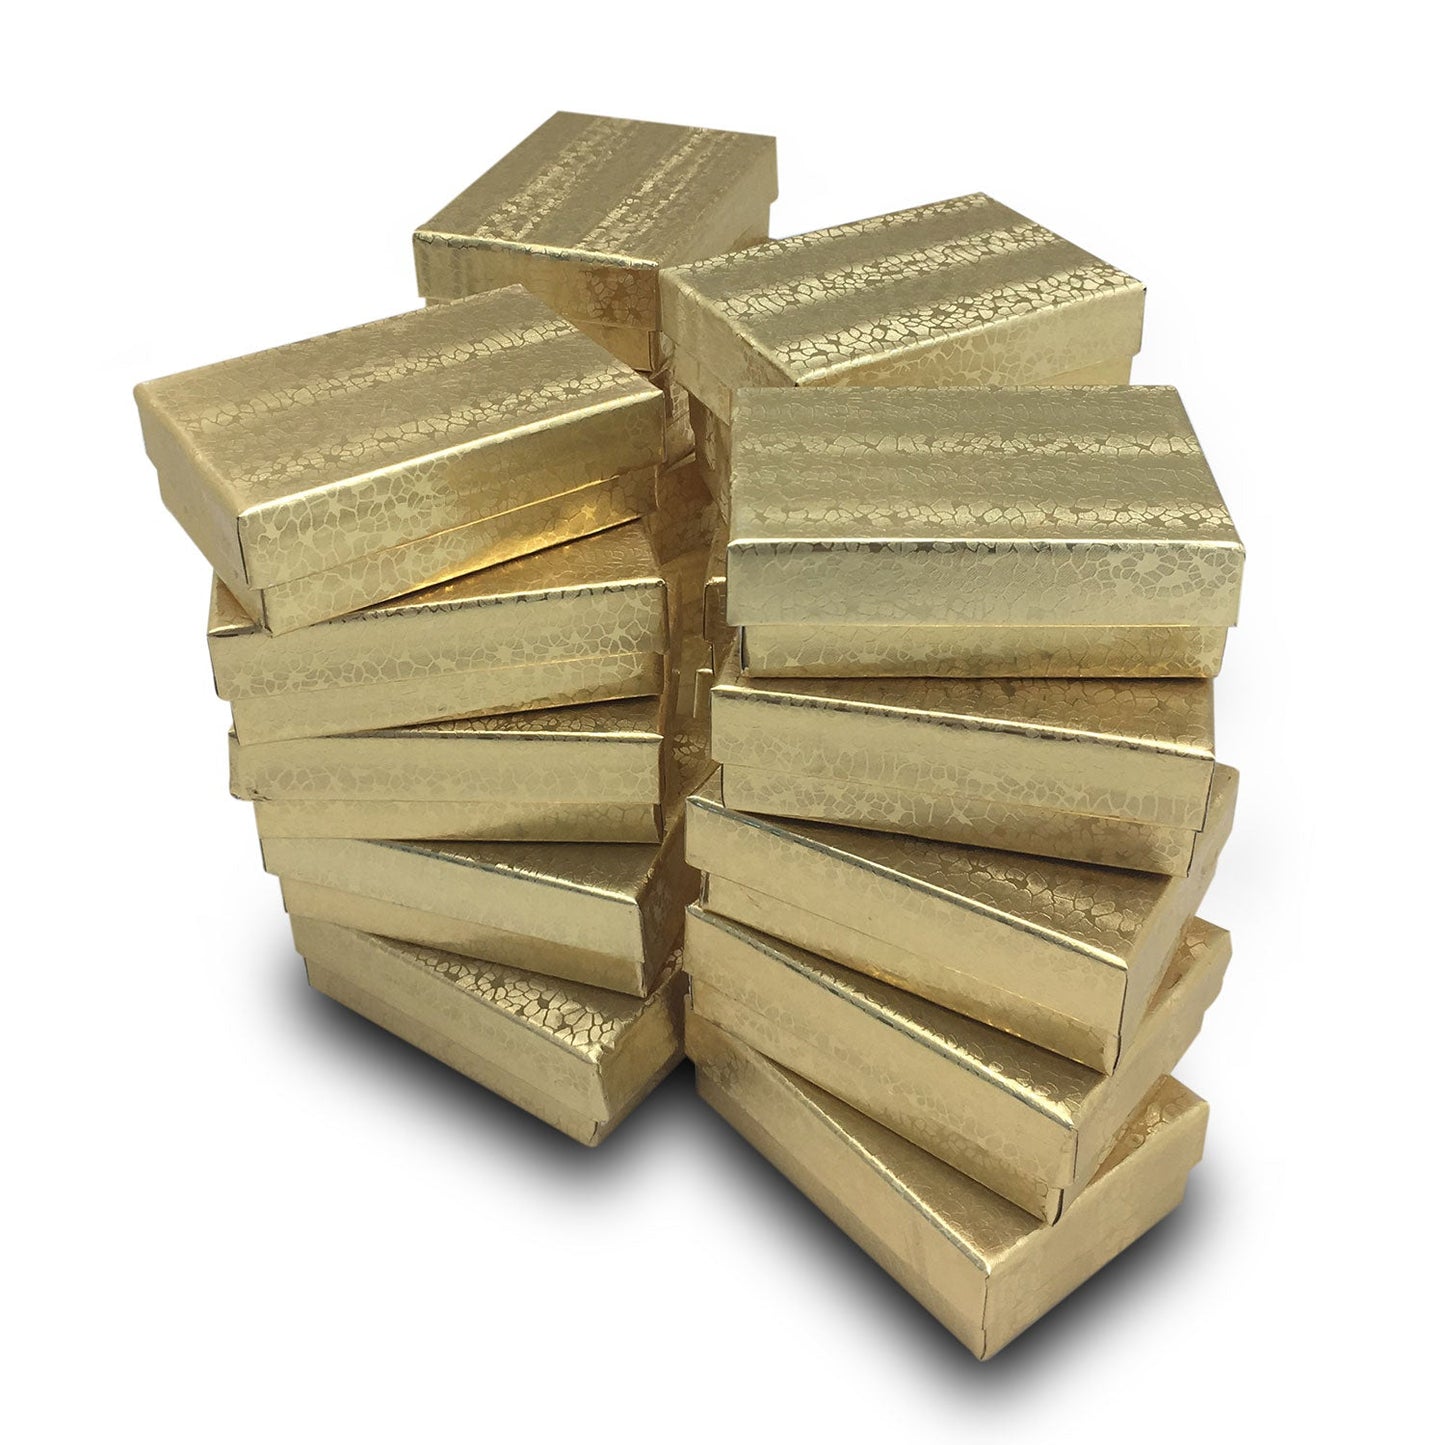 #G32 - 3 1/4"W x 2 1/4"D x 1H Gold Foil Cotton Filled Box